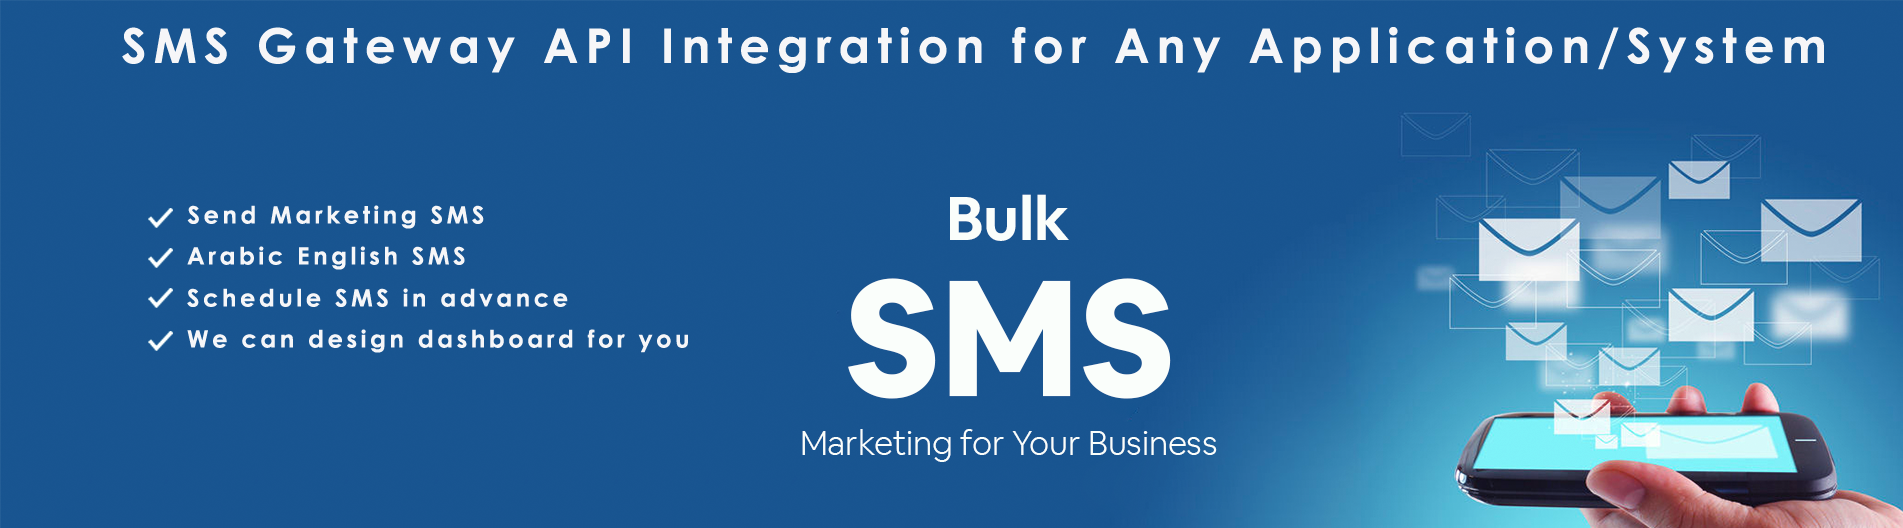 SMS Gateway Integration